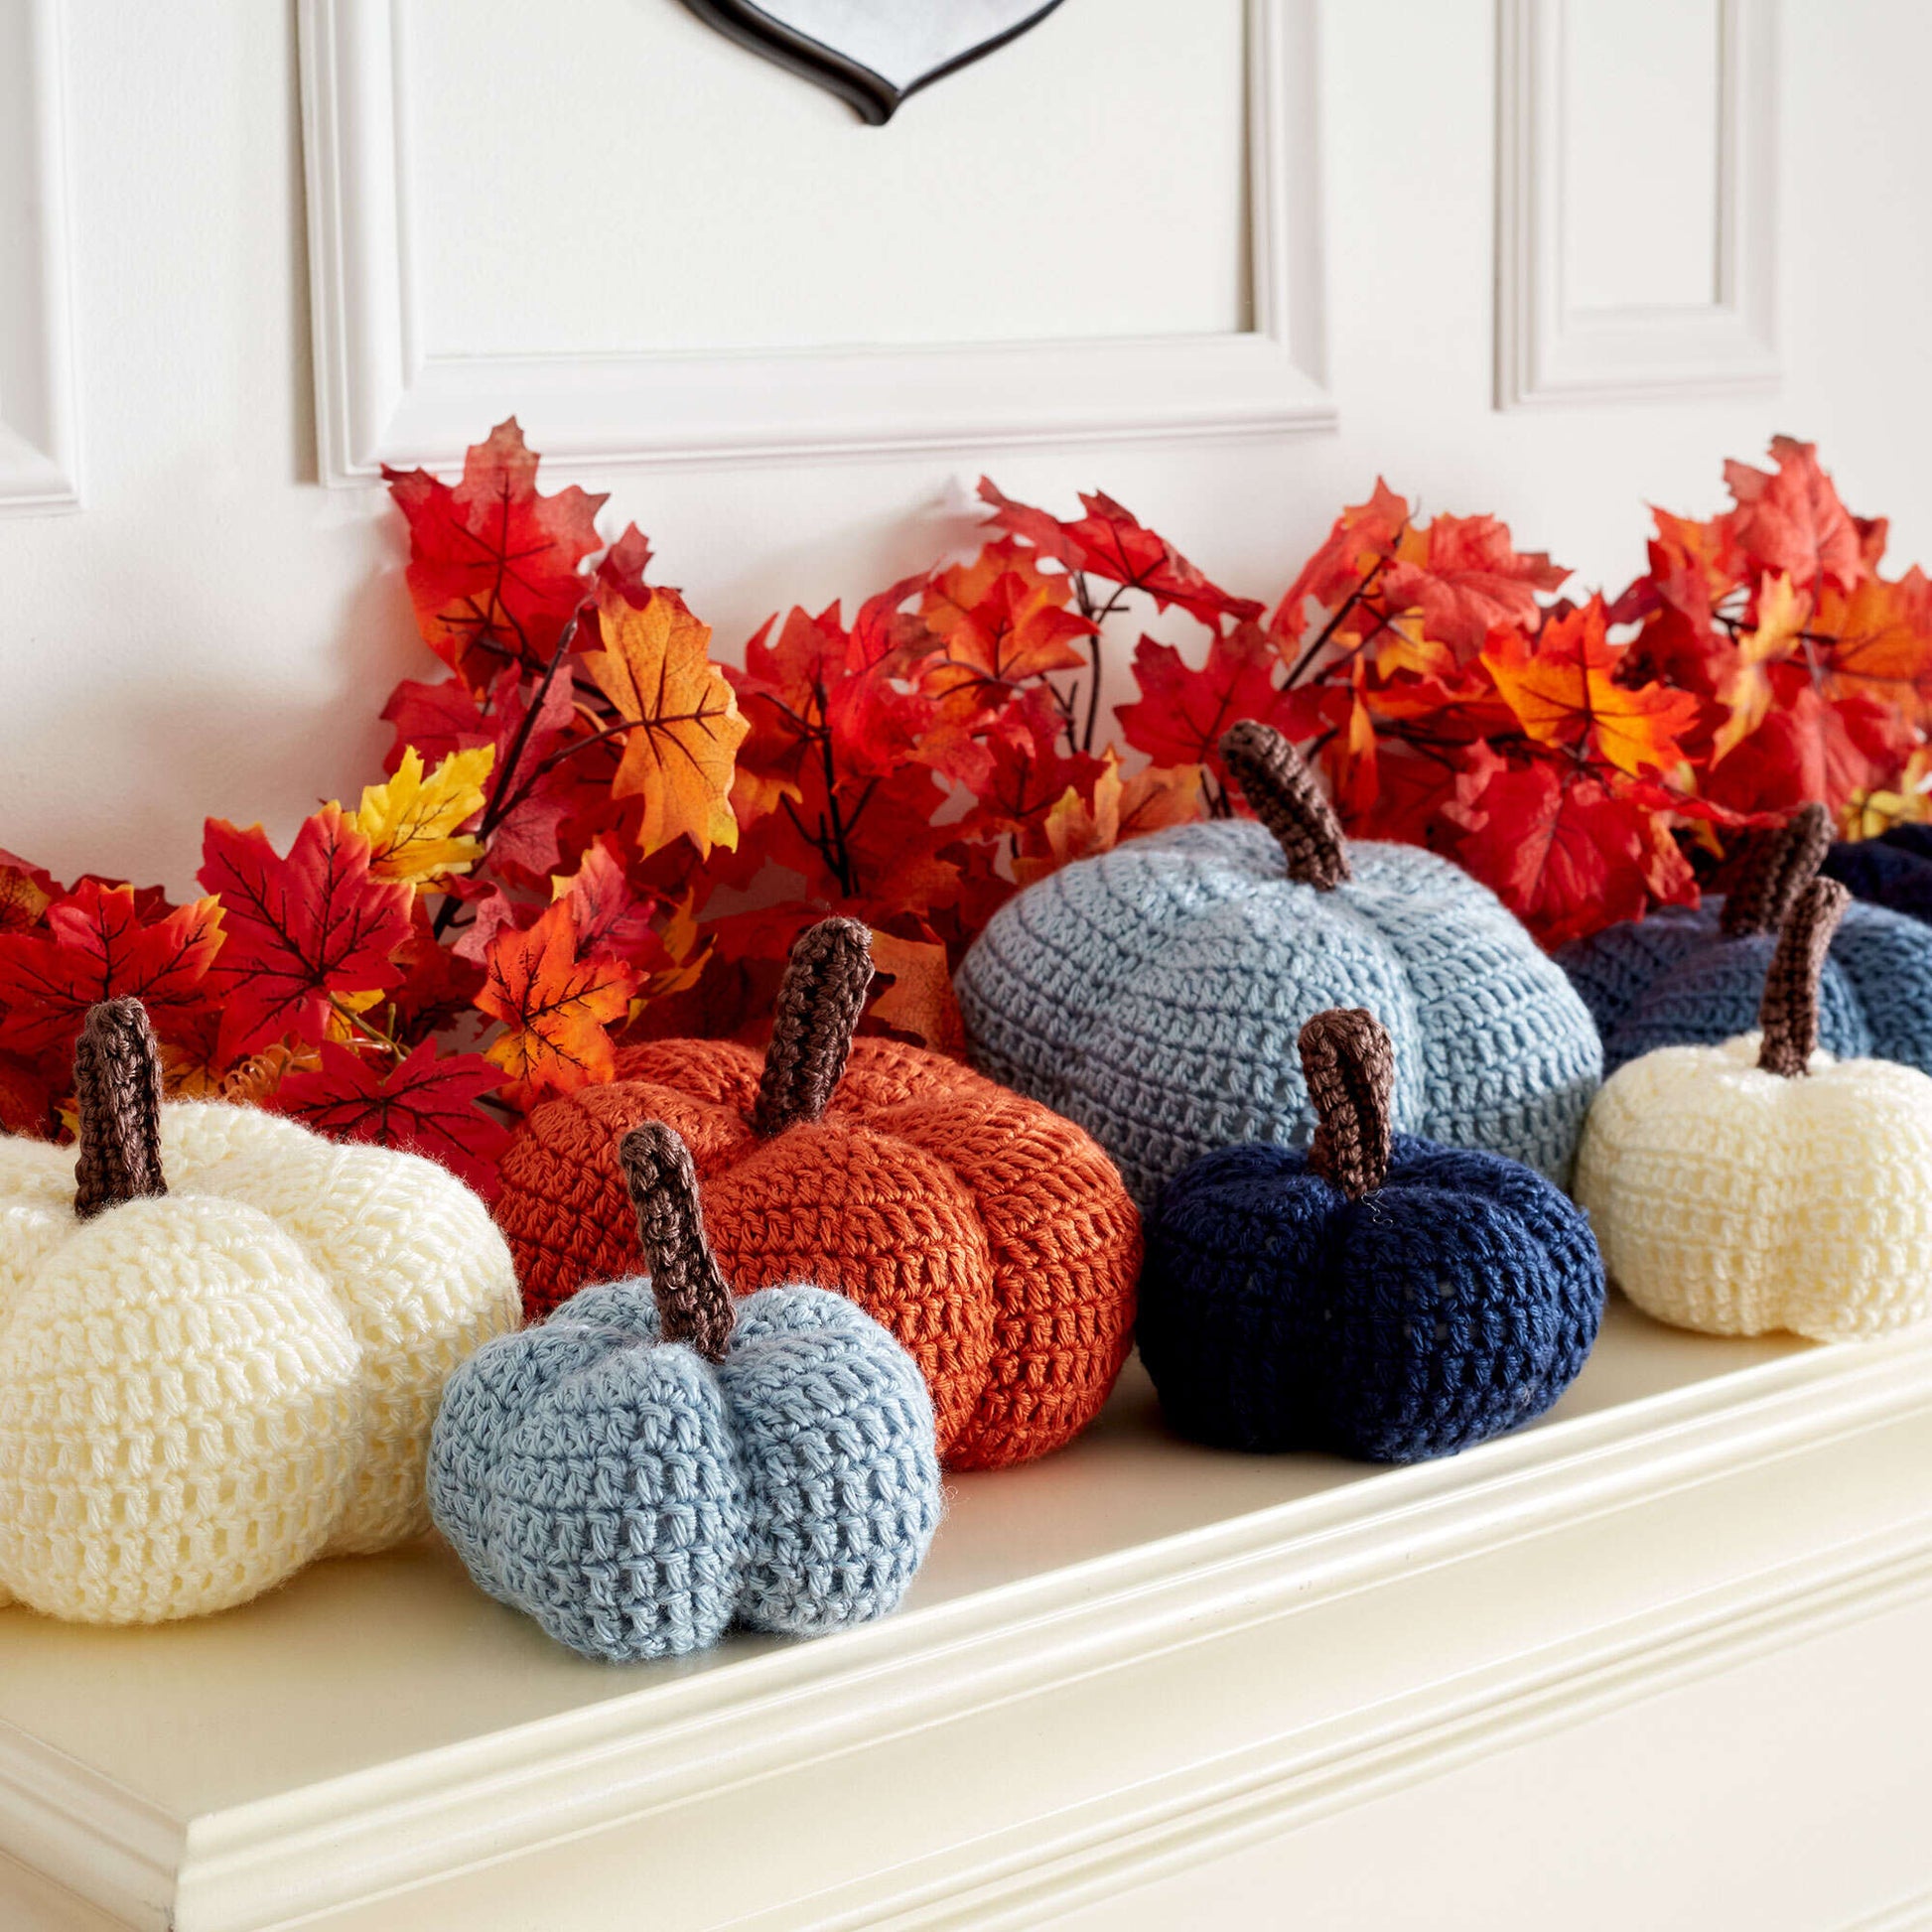 Caron Harvest Crochet Pumpkins Dark Country Blue